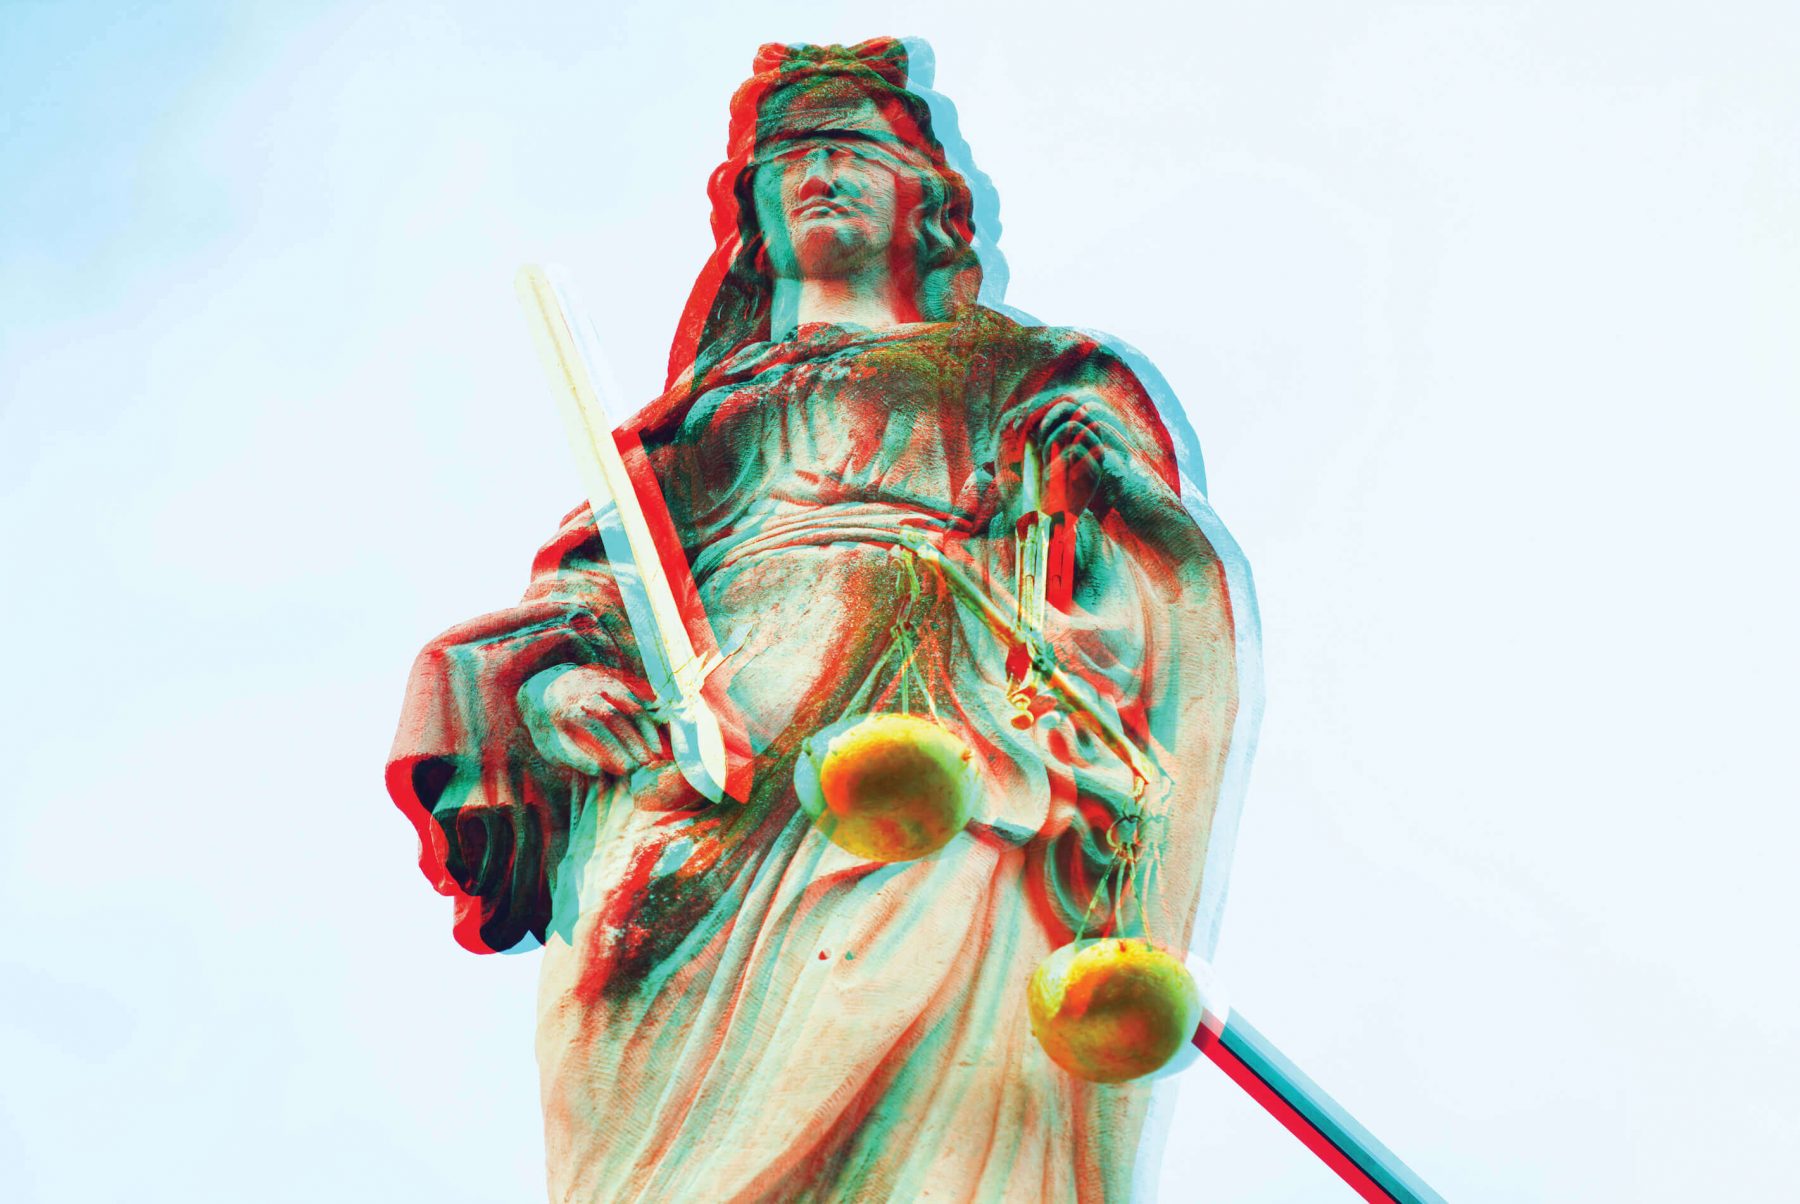 blurry statue